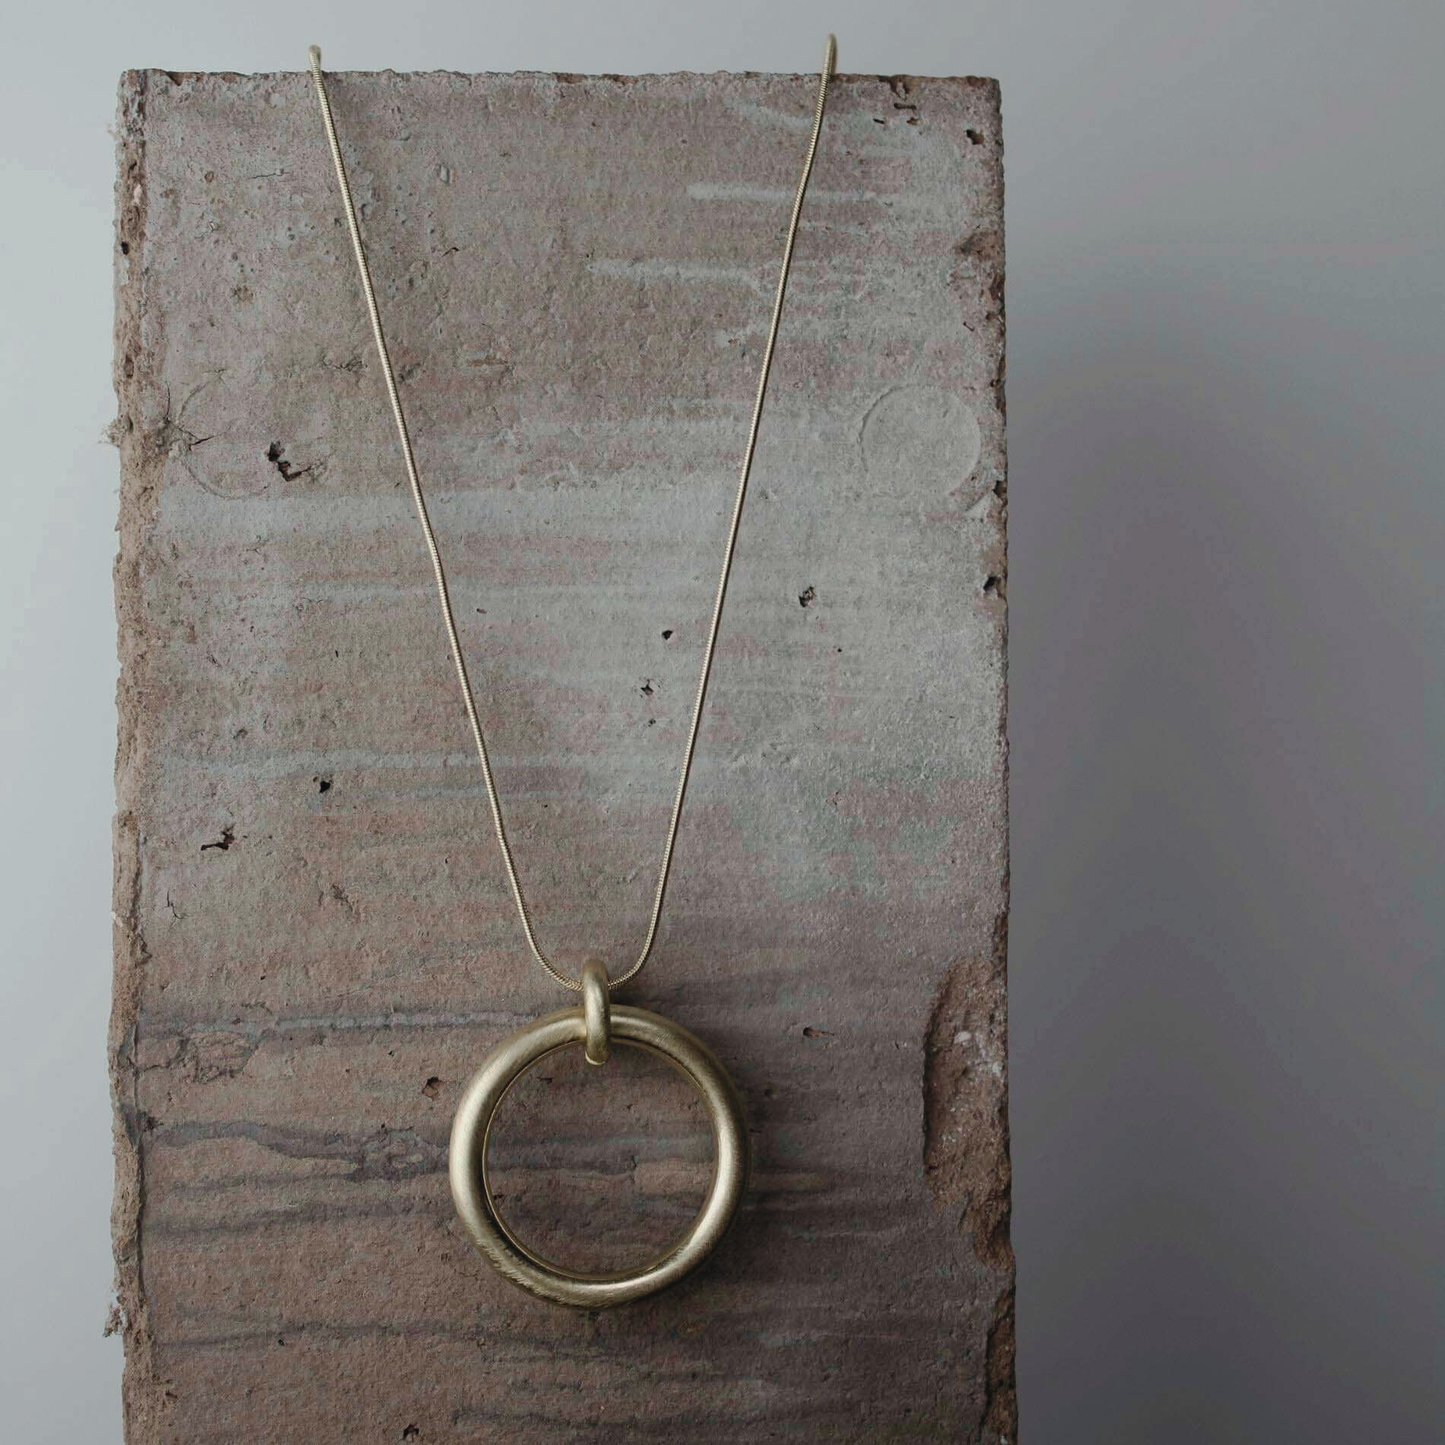 Tula Adjustable Chunky Ring Necklace Gold Plating I Dansk Copenhagen